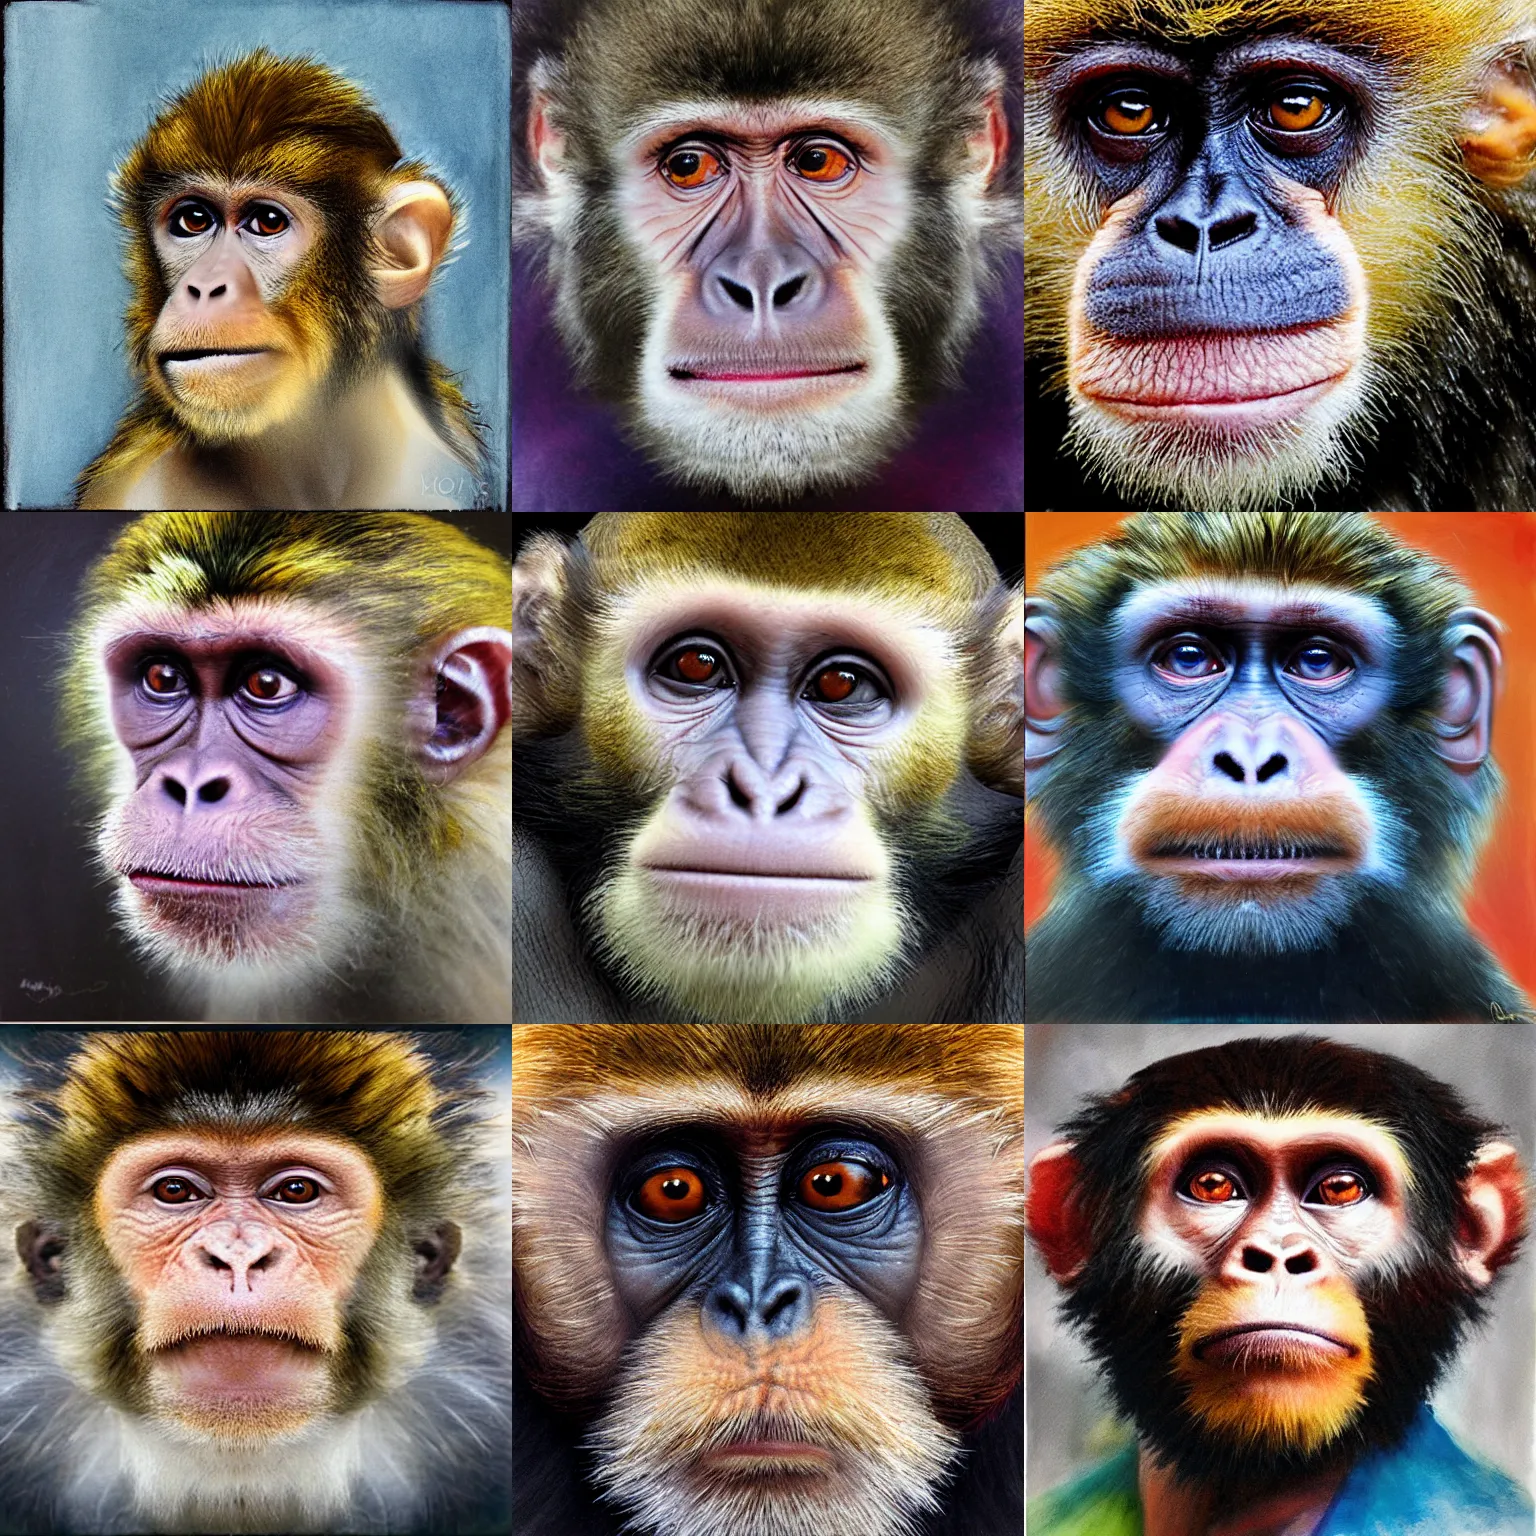 Prompt: portrait of chuck norris mixed monkey